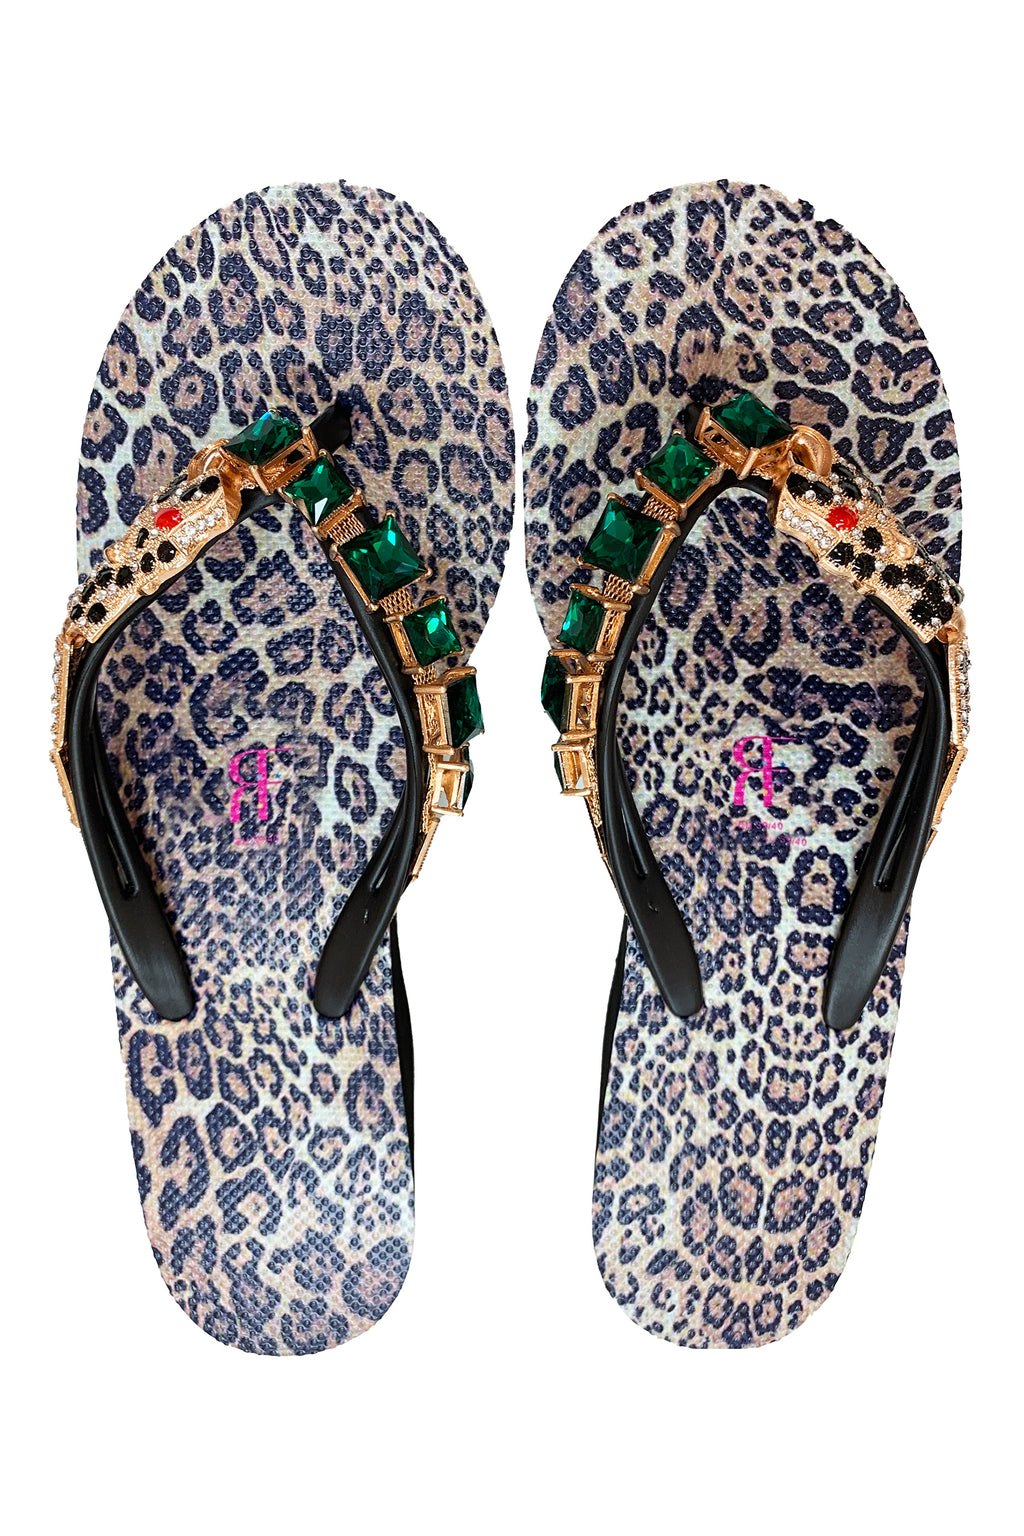 Jewel Rhinestone Leopard Print High Heels